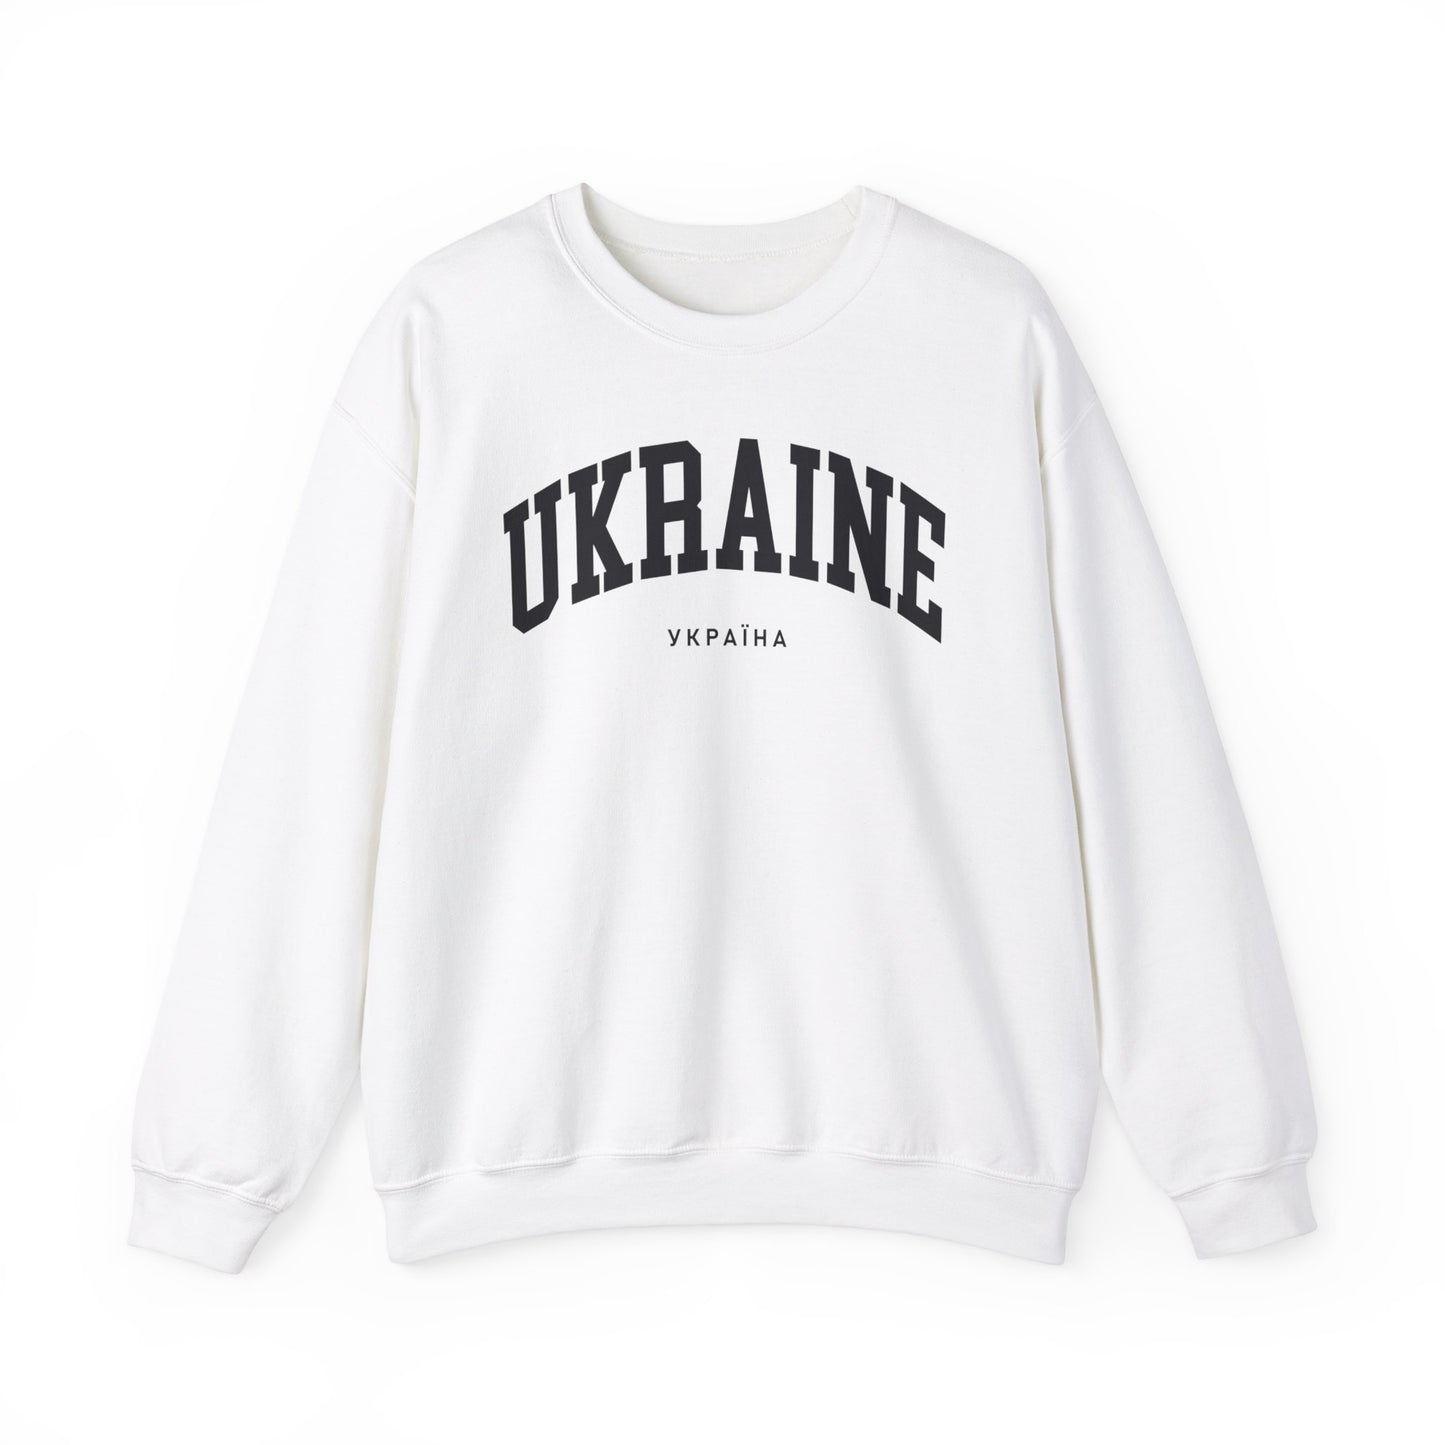 Ukraine Sweatshirt